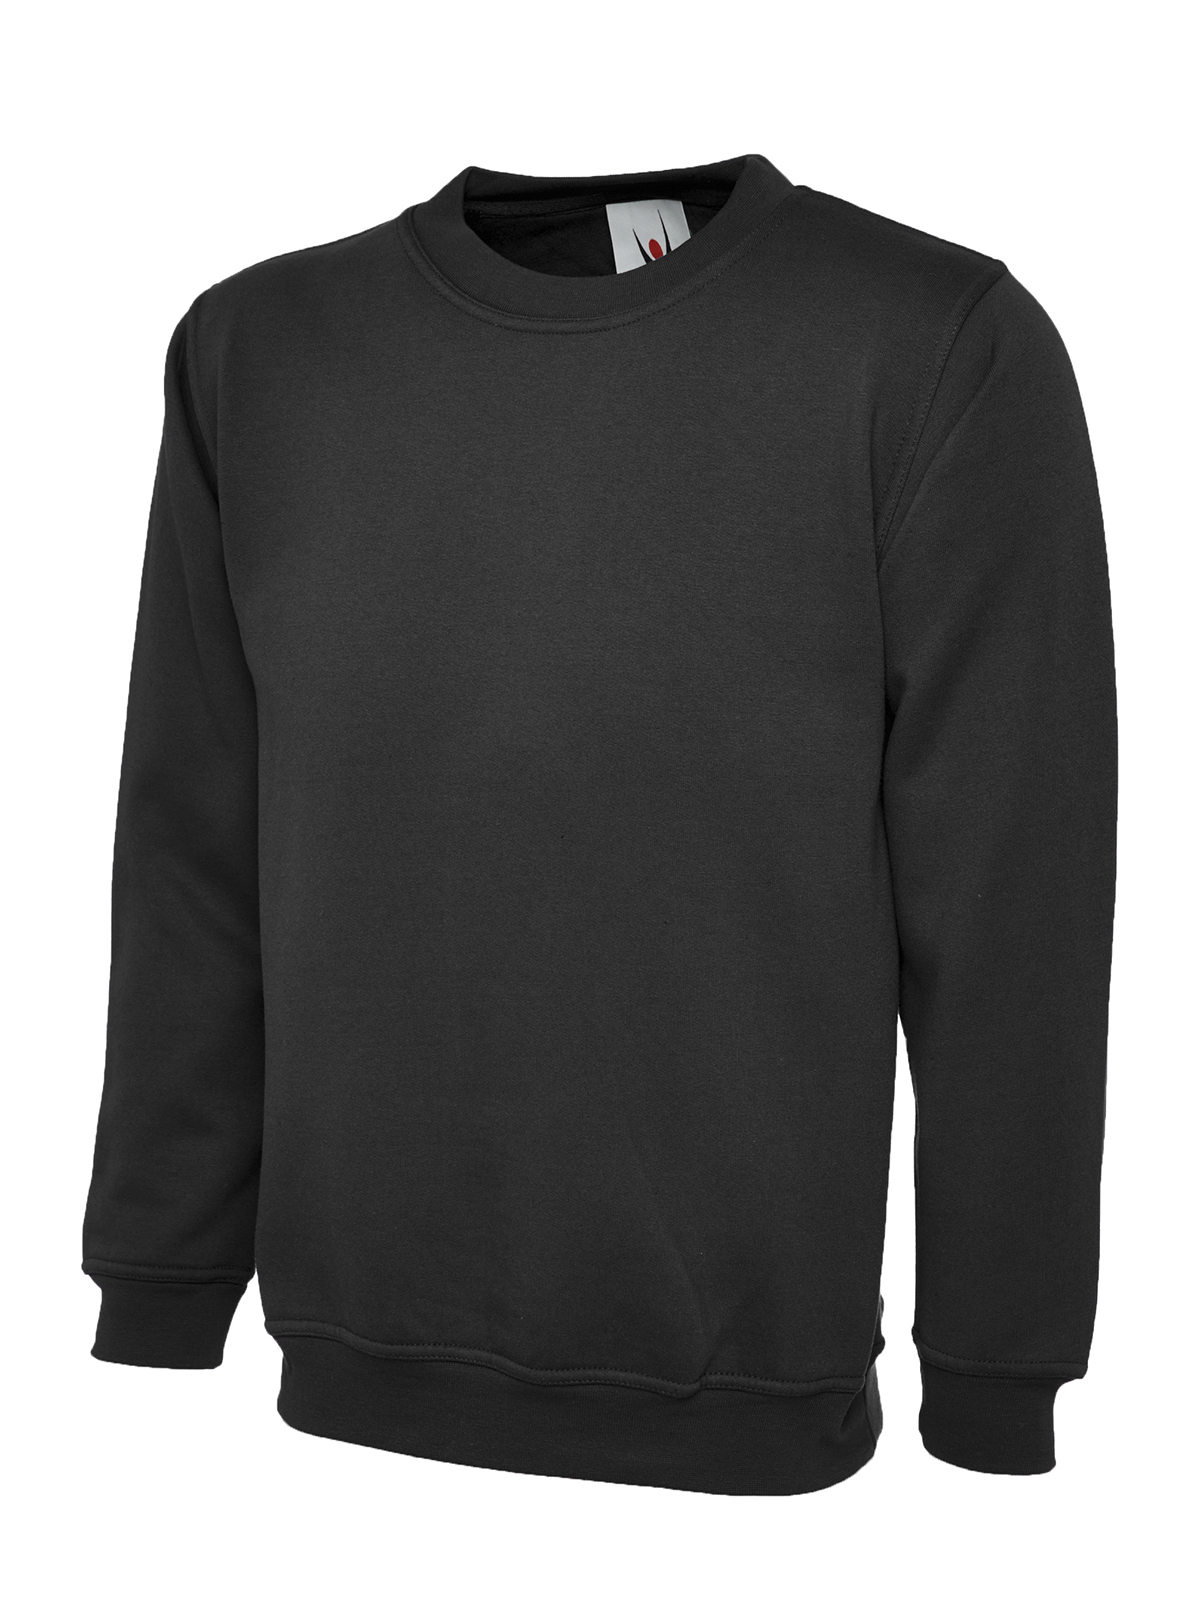 Uc203 300gsm classic sweatshirt - black - medium